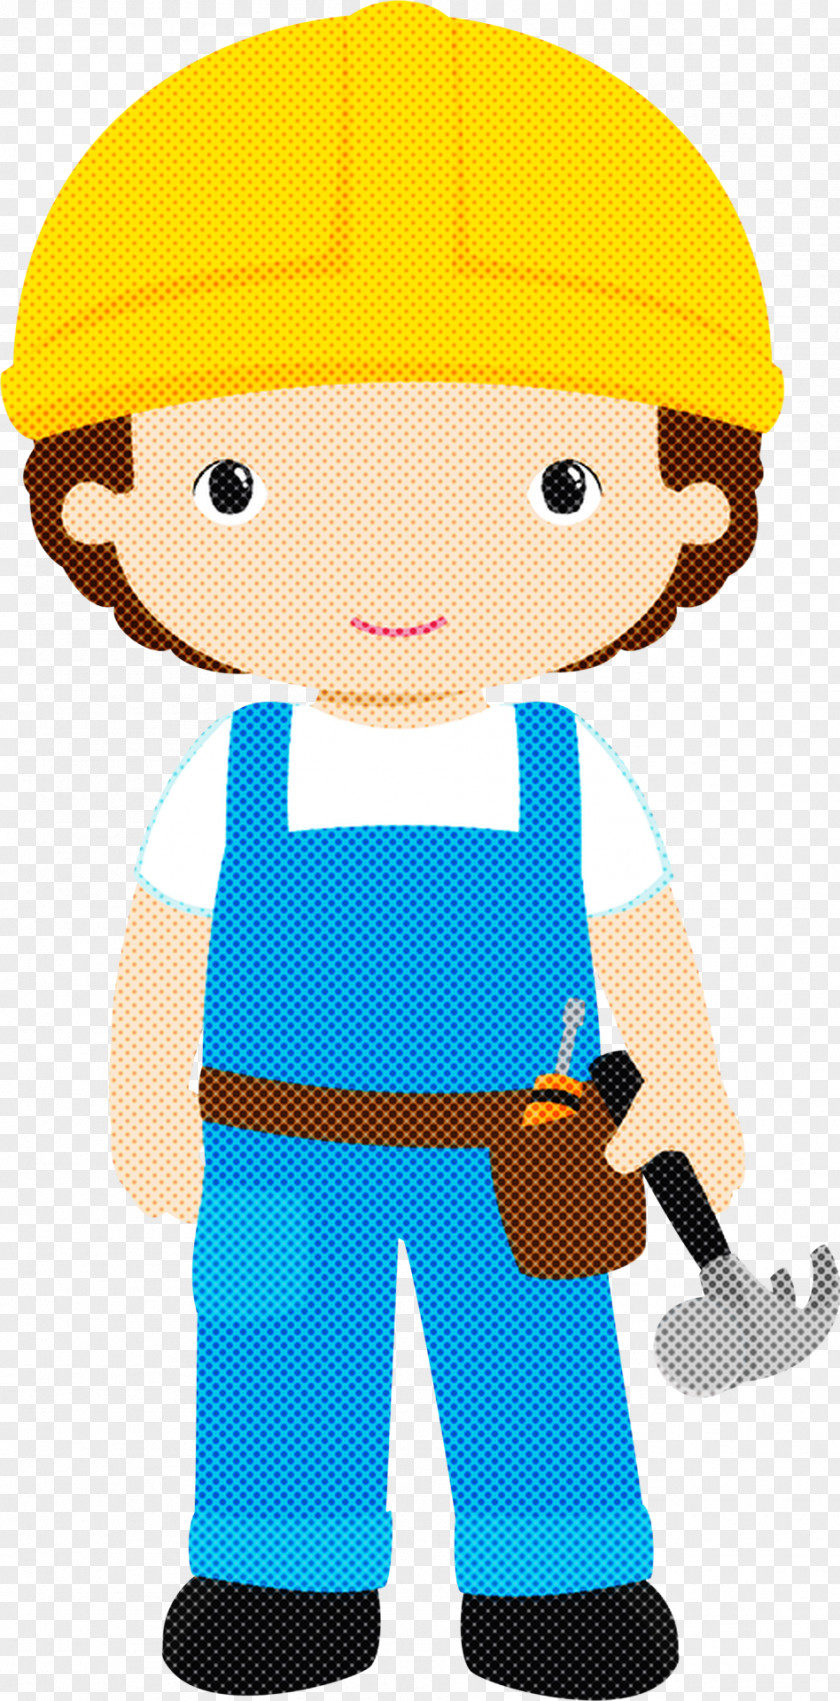 Cartoon Construction Worker Child PNG